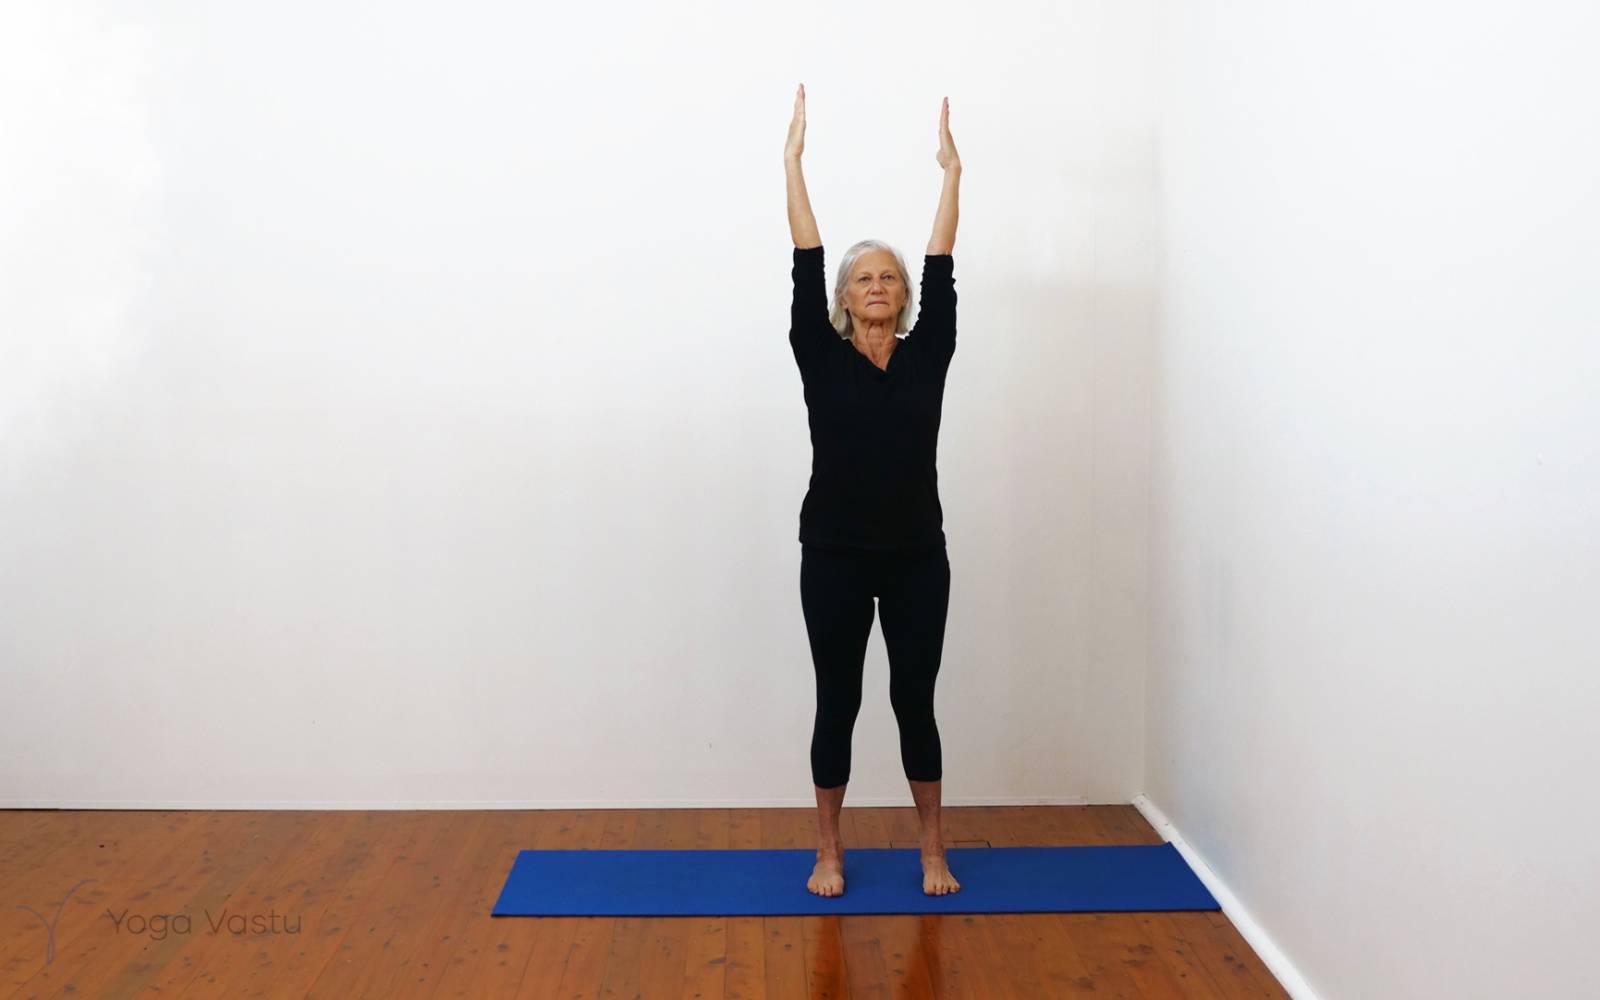 Weight-Bearing and Balance Yoga Poses